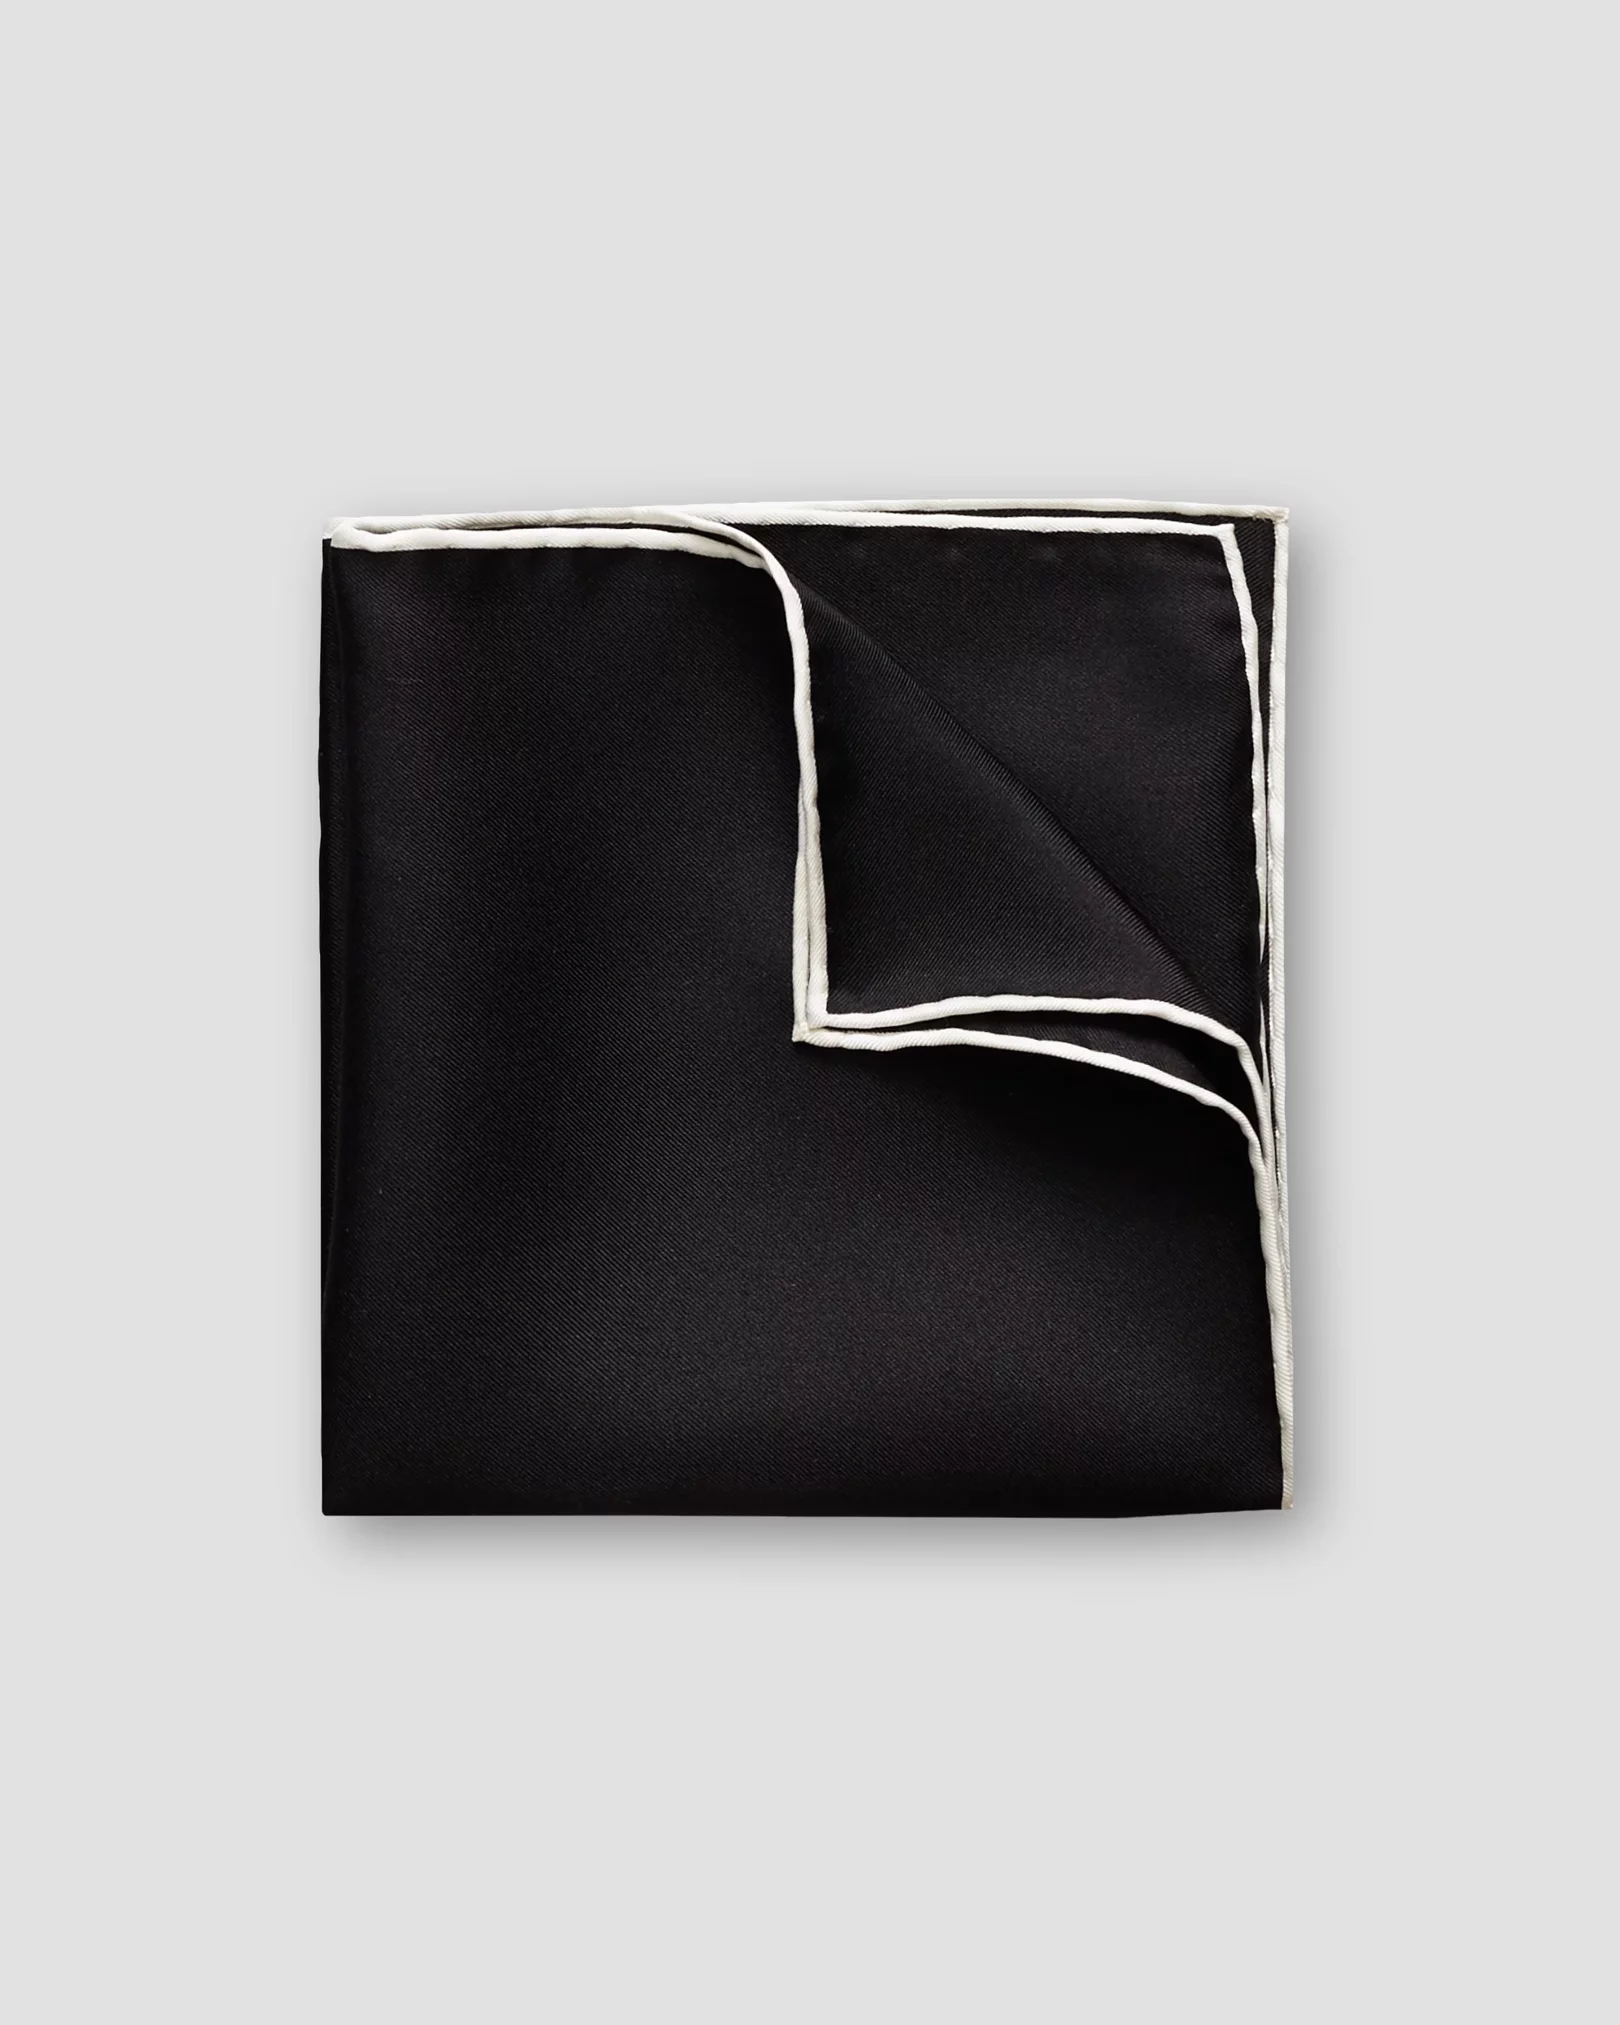 Eton - black silk pocket square